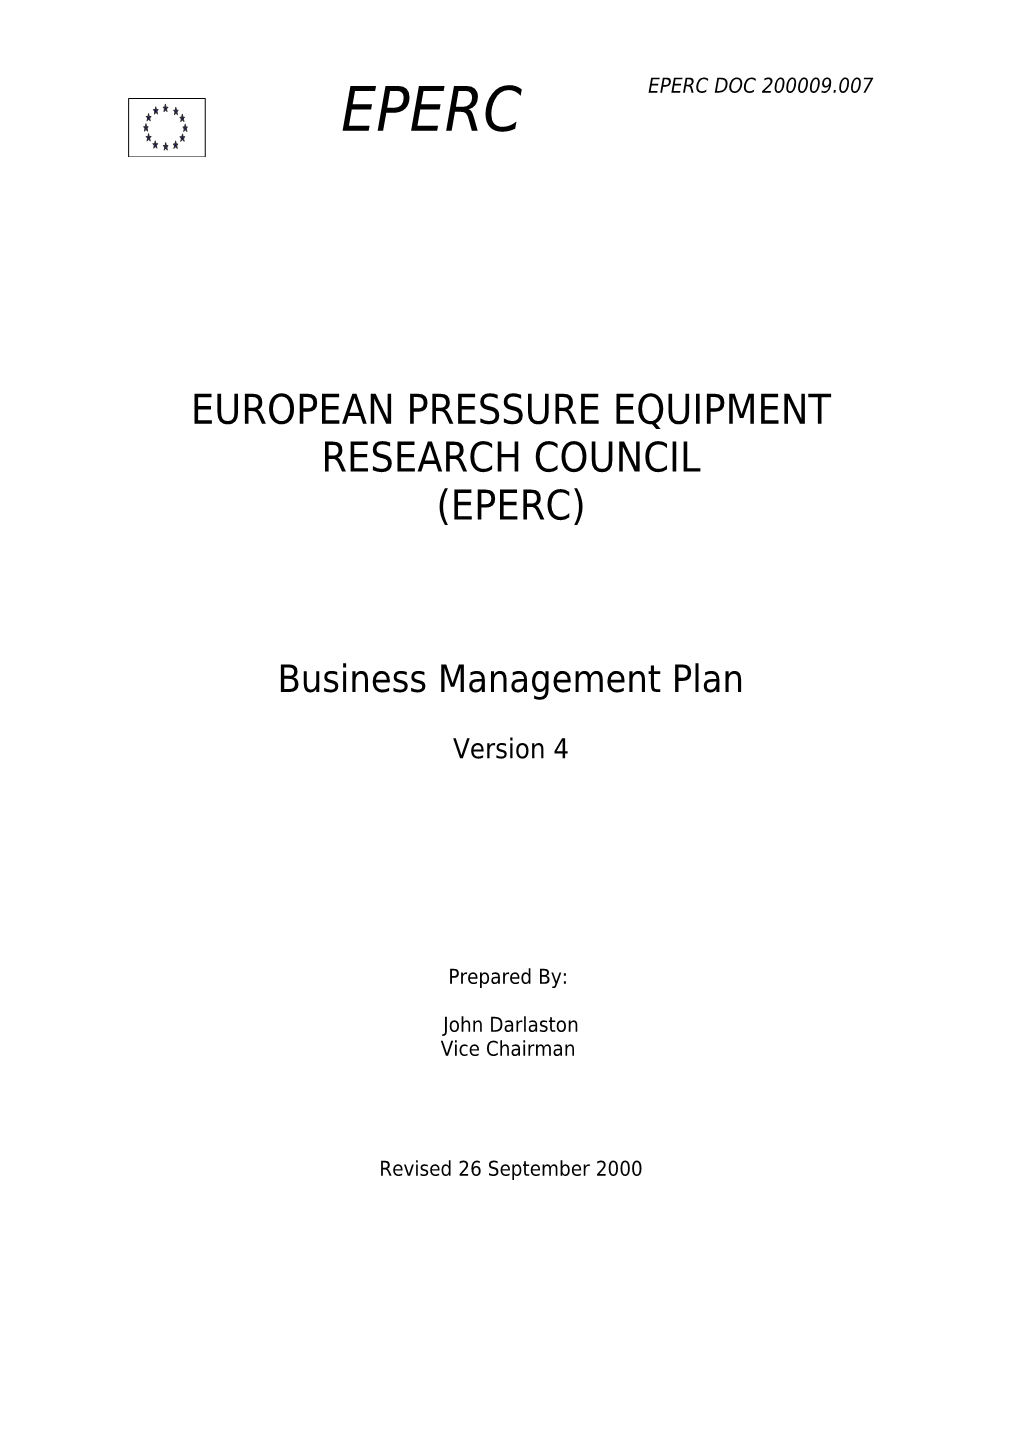 European Pressure Equipment Research Council